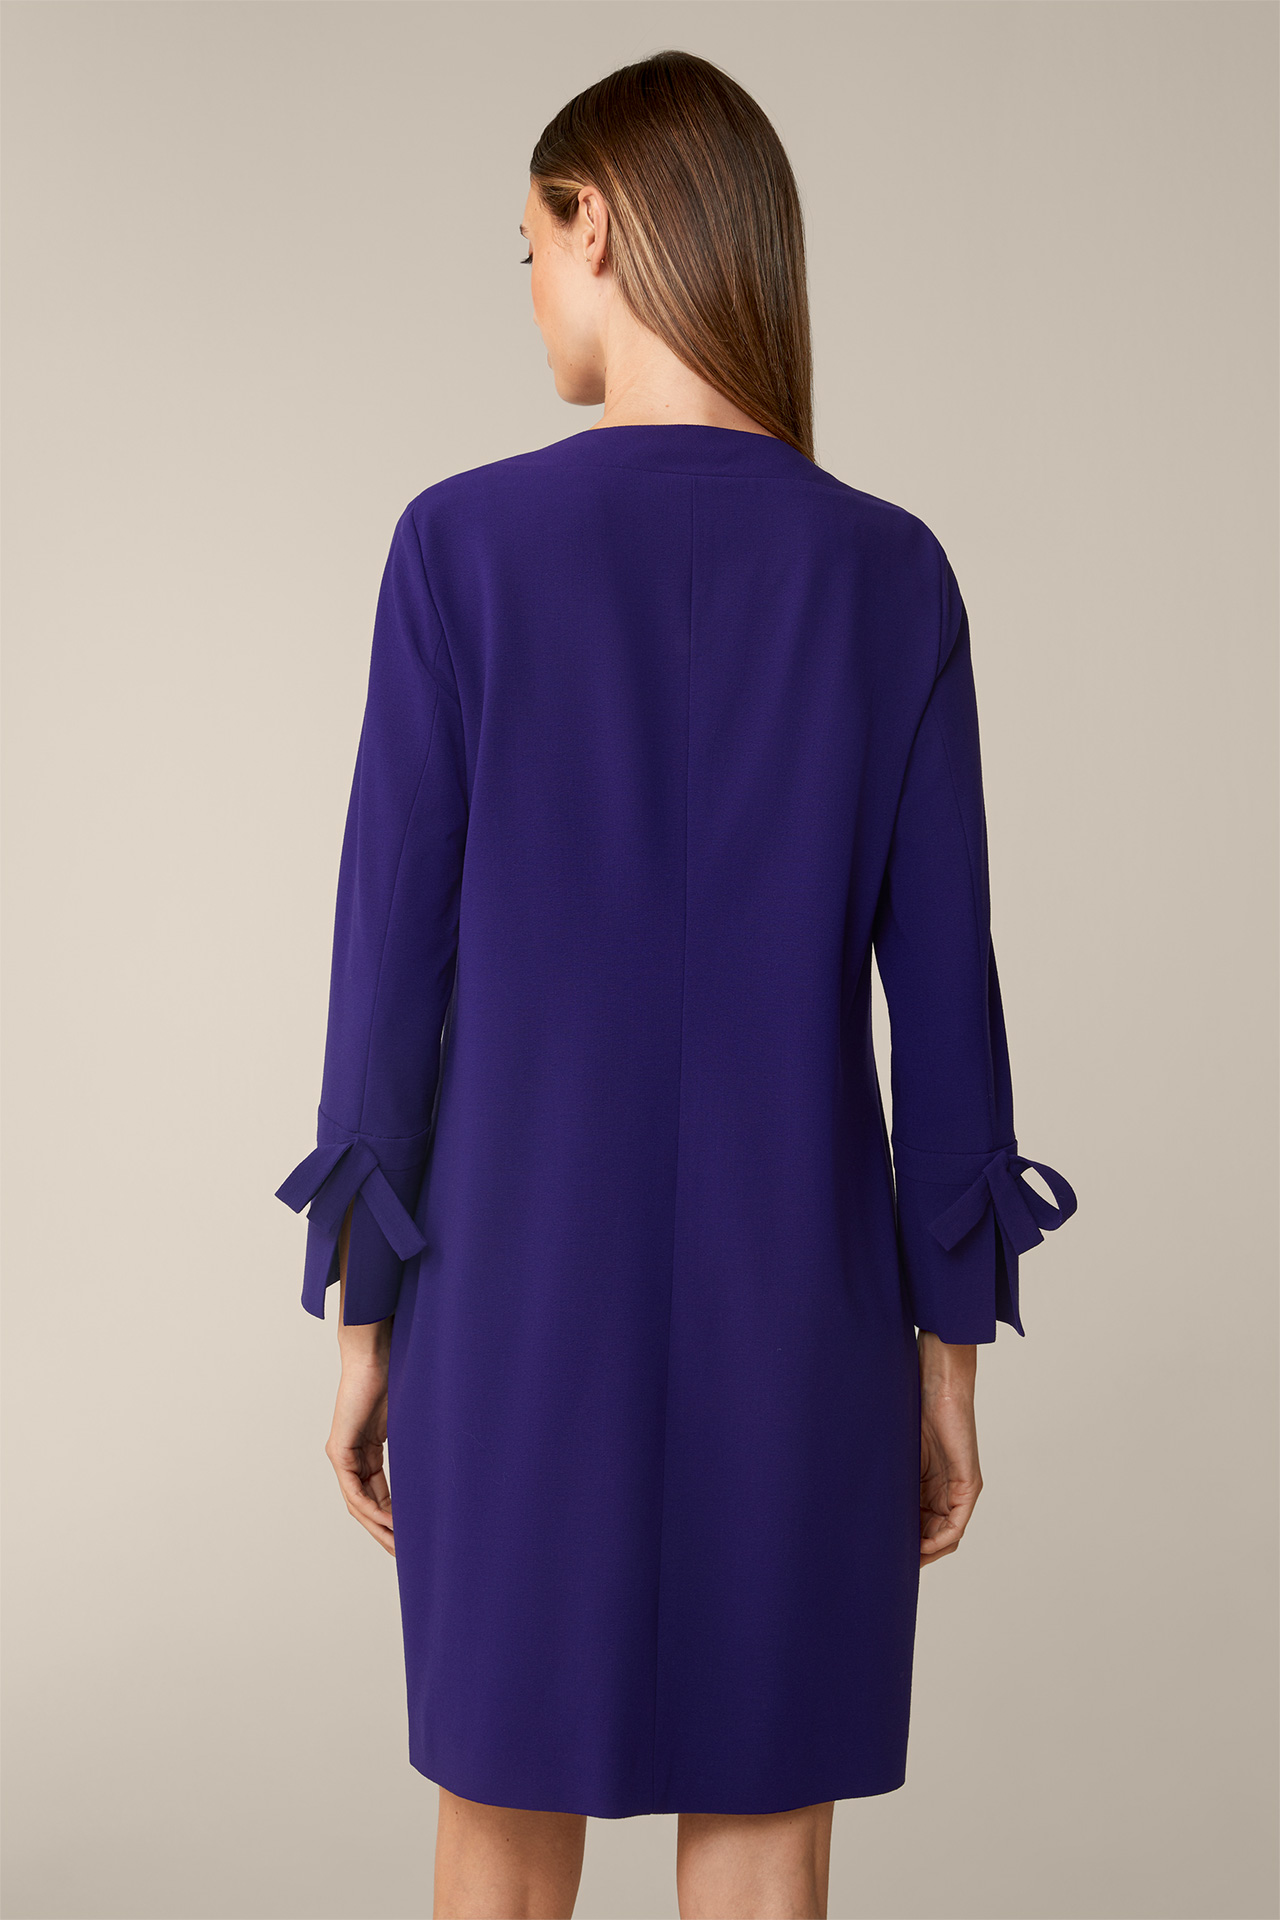 Wool Crêpe Dress in Dark Purple